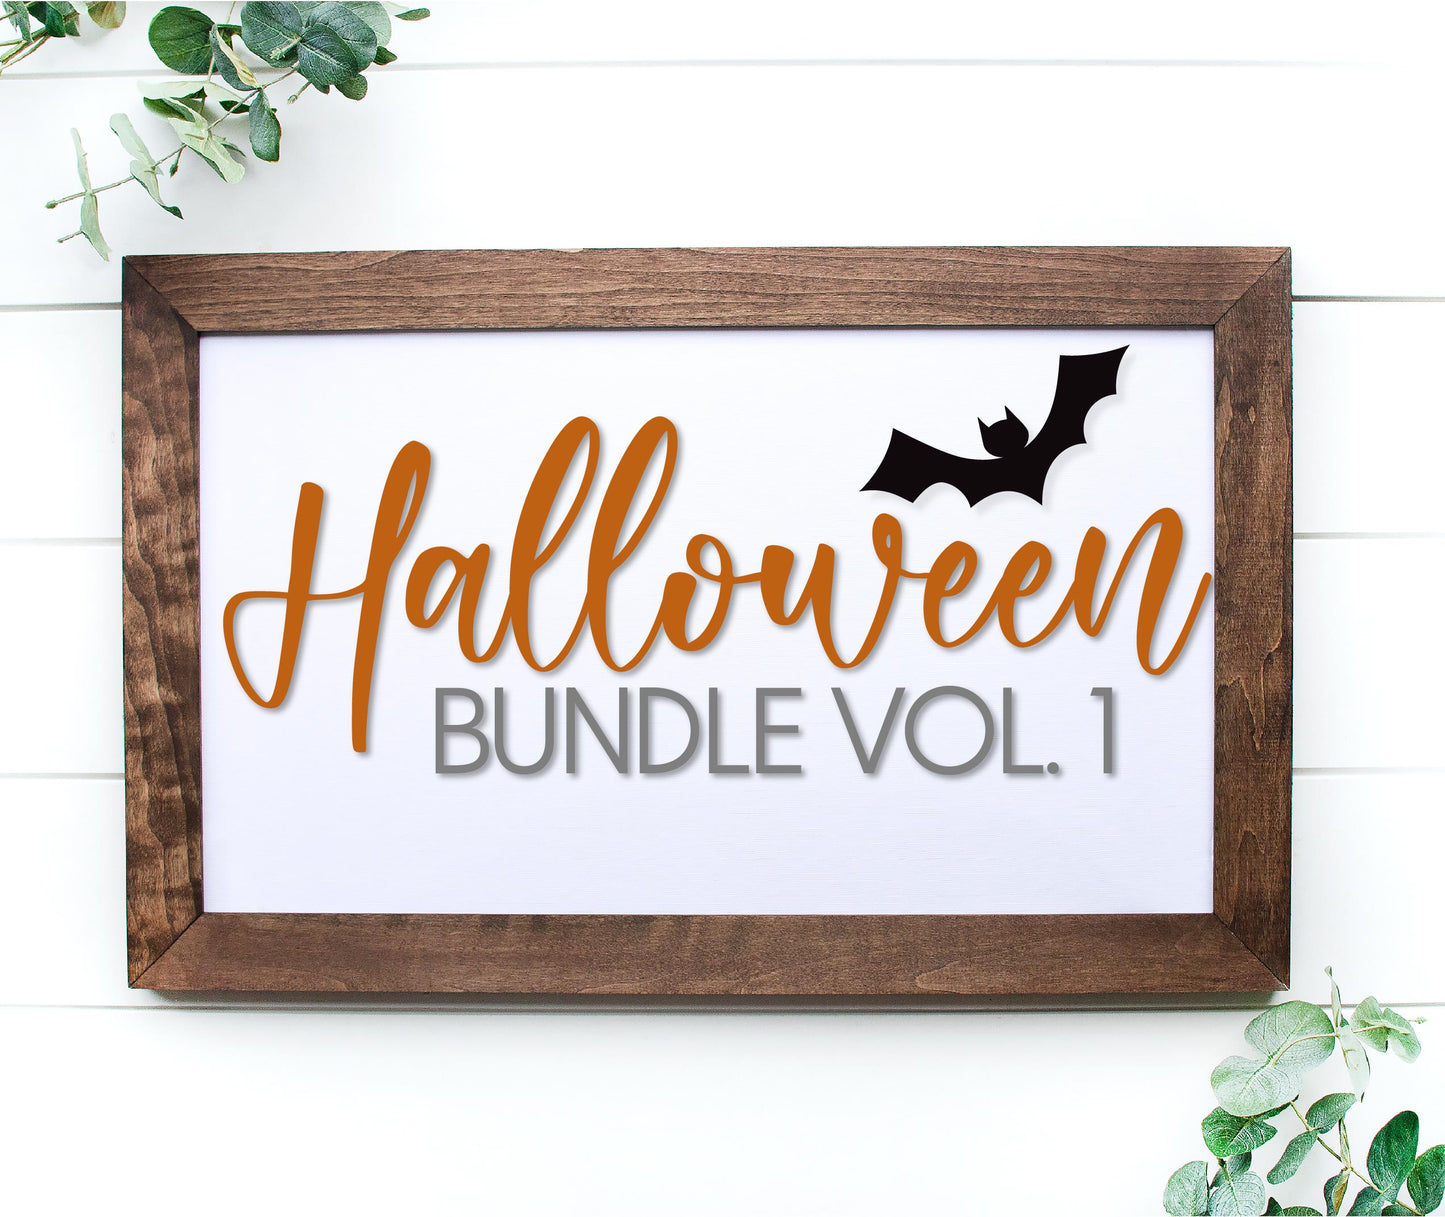 Complete Halloween Collection volume 1, 28 designs, Halloween SVG, Spooky SVG, Glowforge Svg, laser cut files